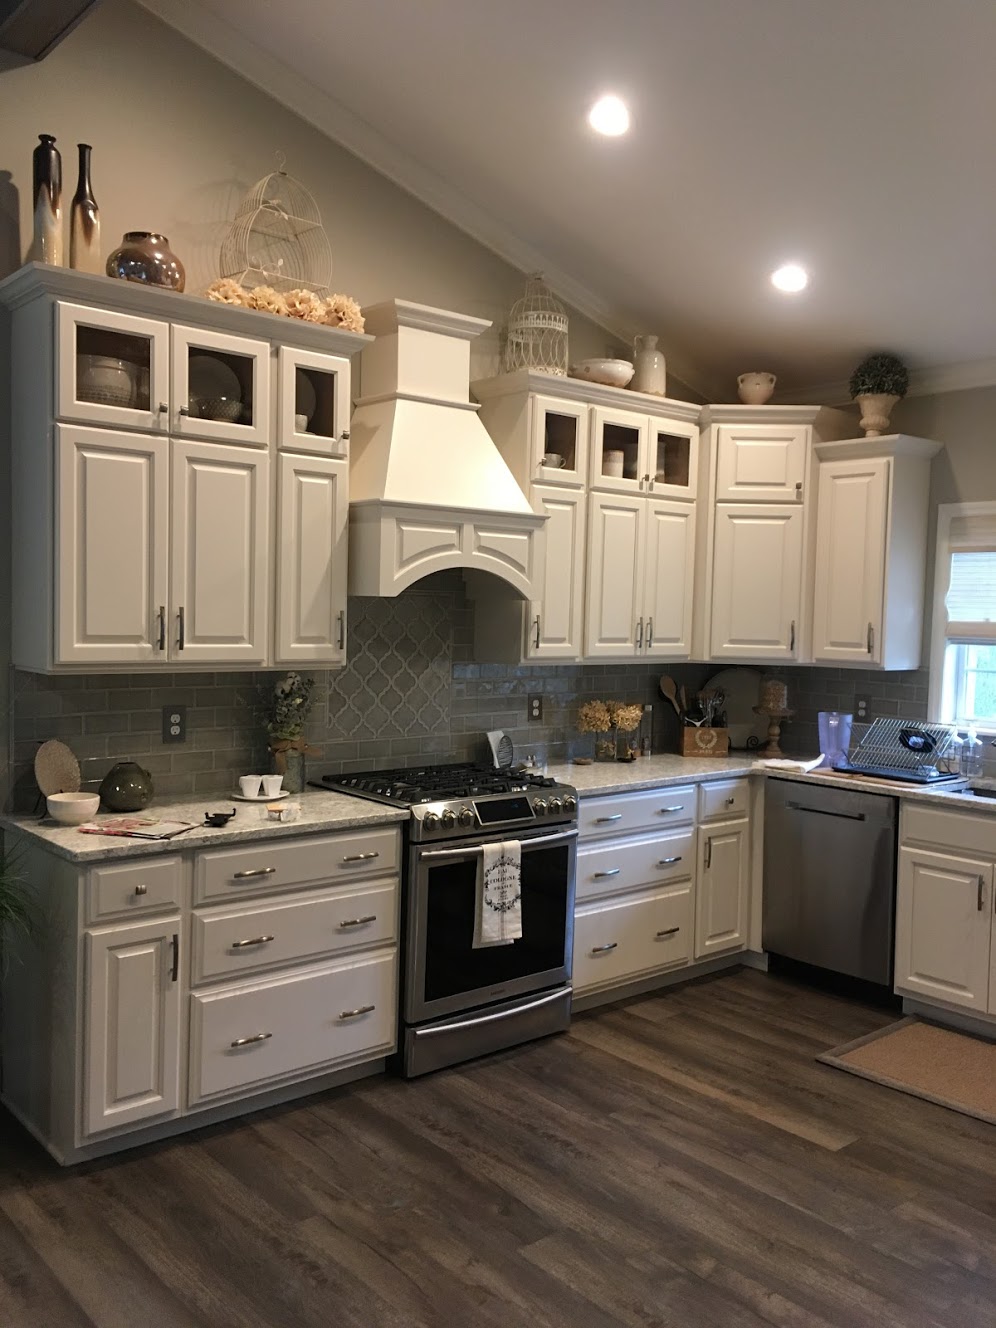 Beautiful White Kitchen, Decorative Tile Backsplash, Glass Front Door, Decorative Hood and Stainless Steel Appliances